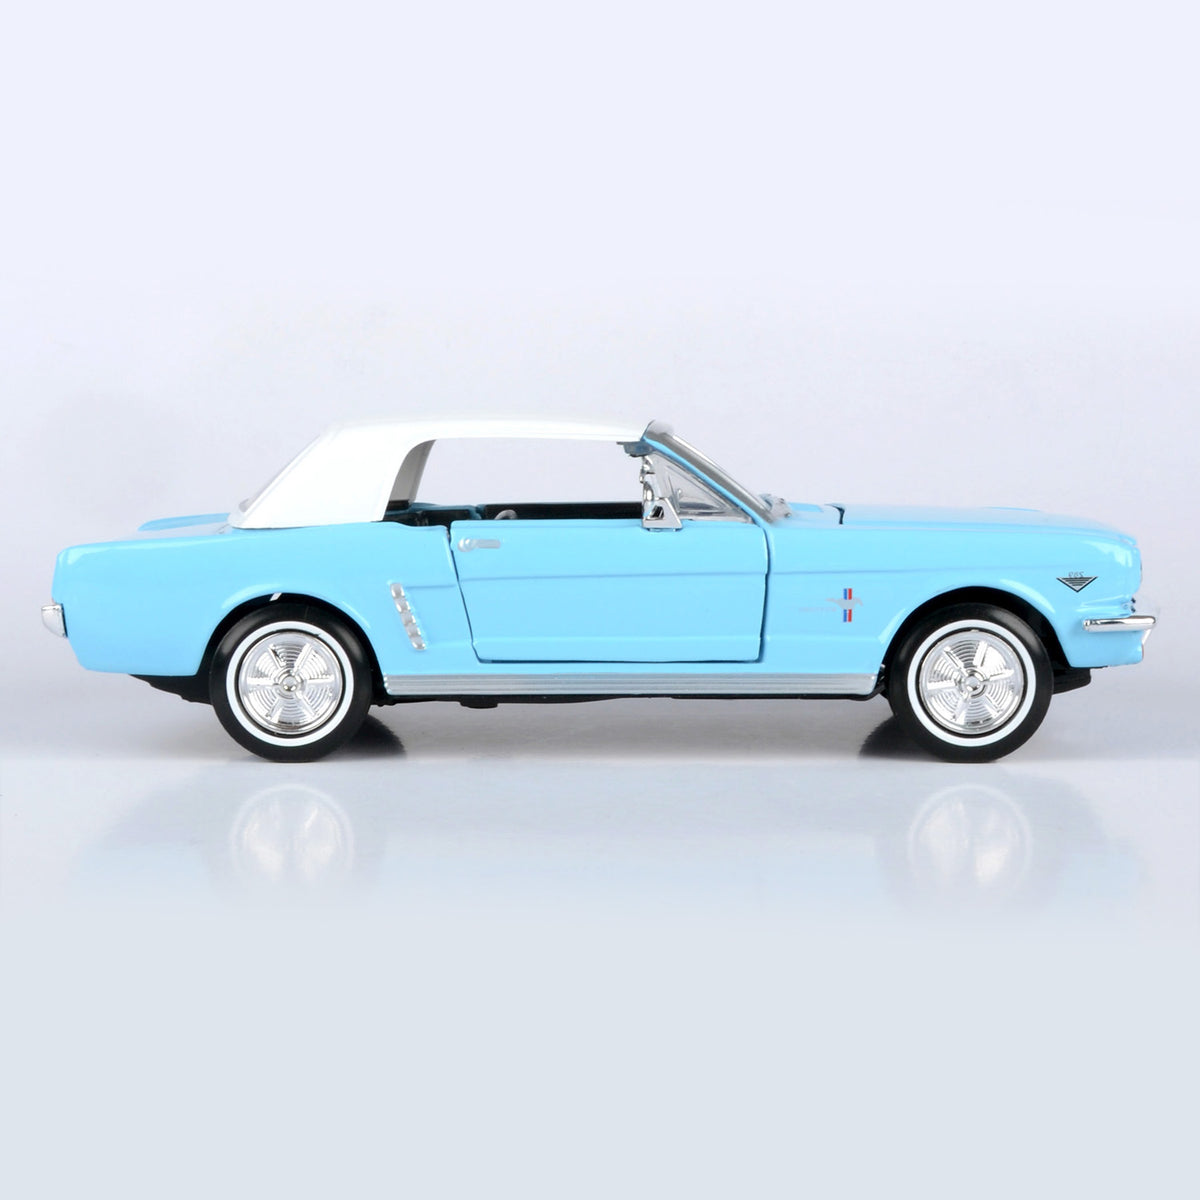 James Bond Ford Mustang Modellauto - Thunderball Edition - Von Motormax